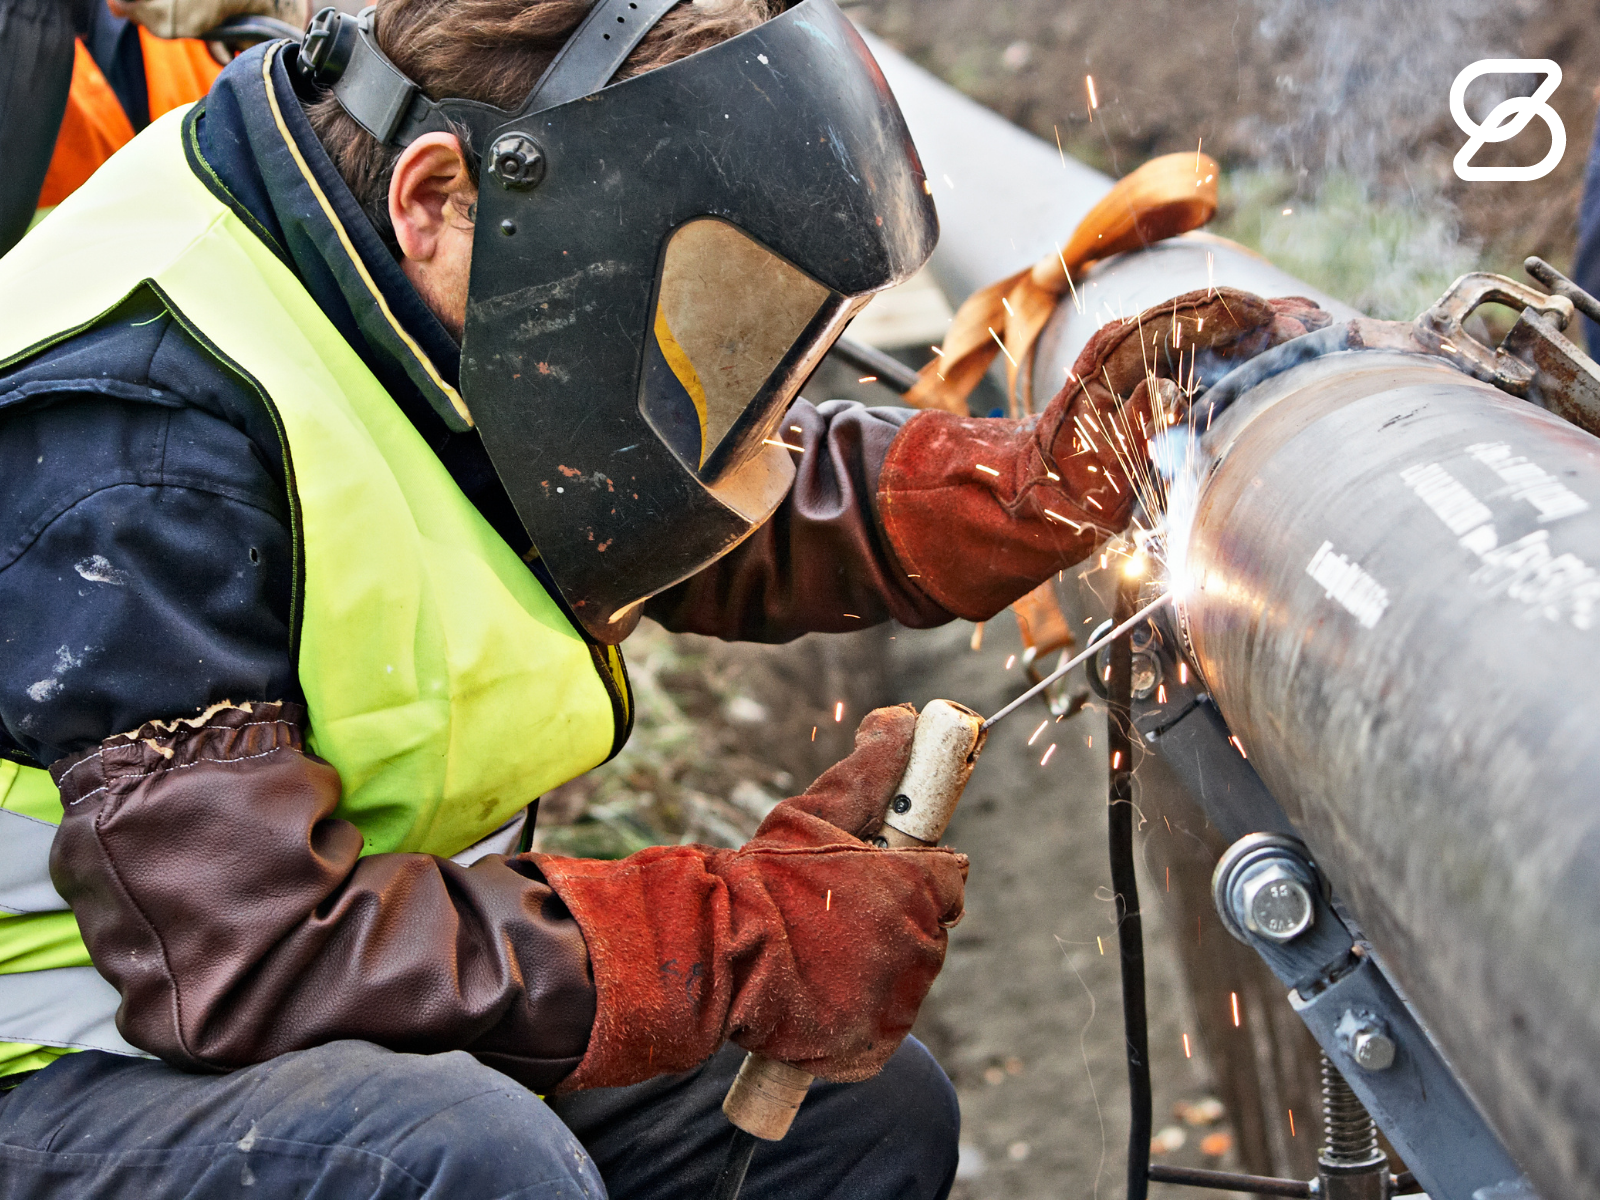 Local welding jobs hiring memphis local jobs